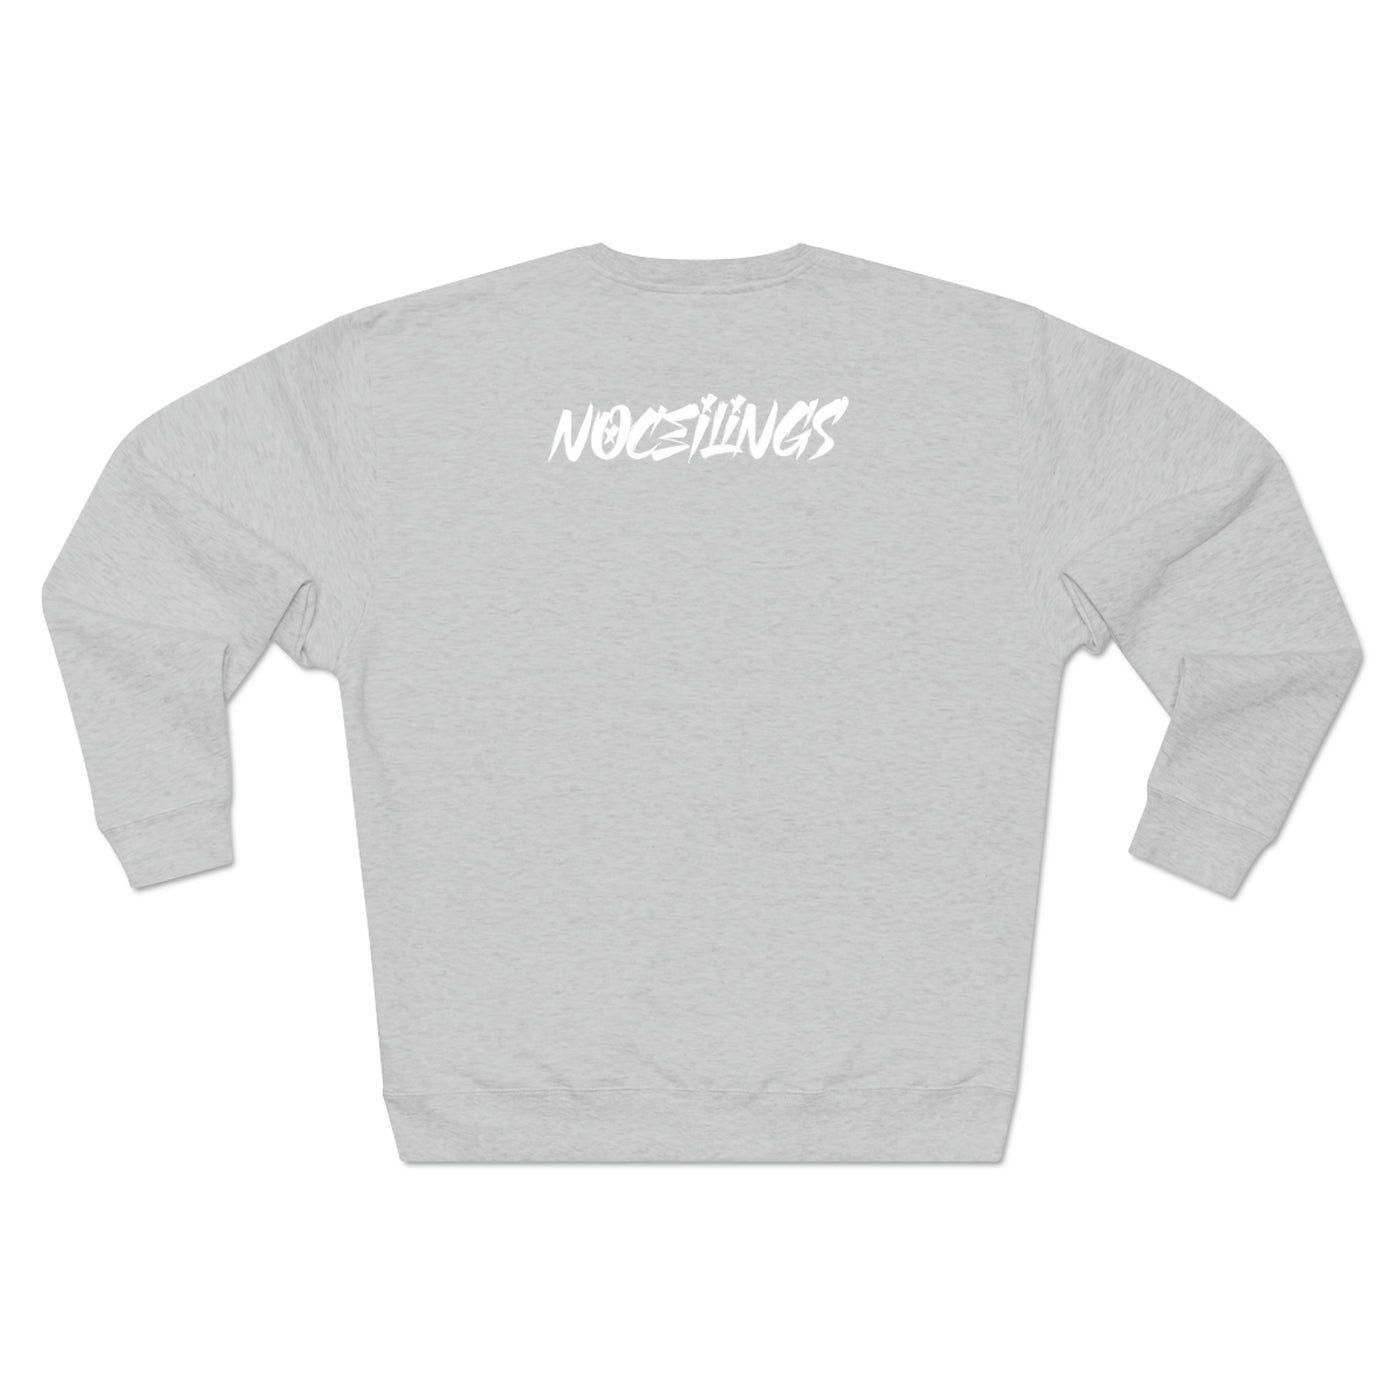 "Never be afraid Multiple Colors " Unisex Premium Crewneck Sweatshirt - NoCeilingsClothing